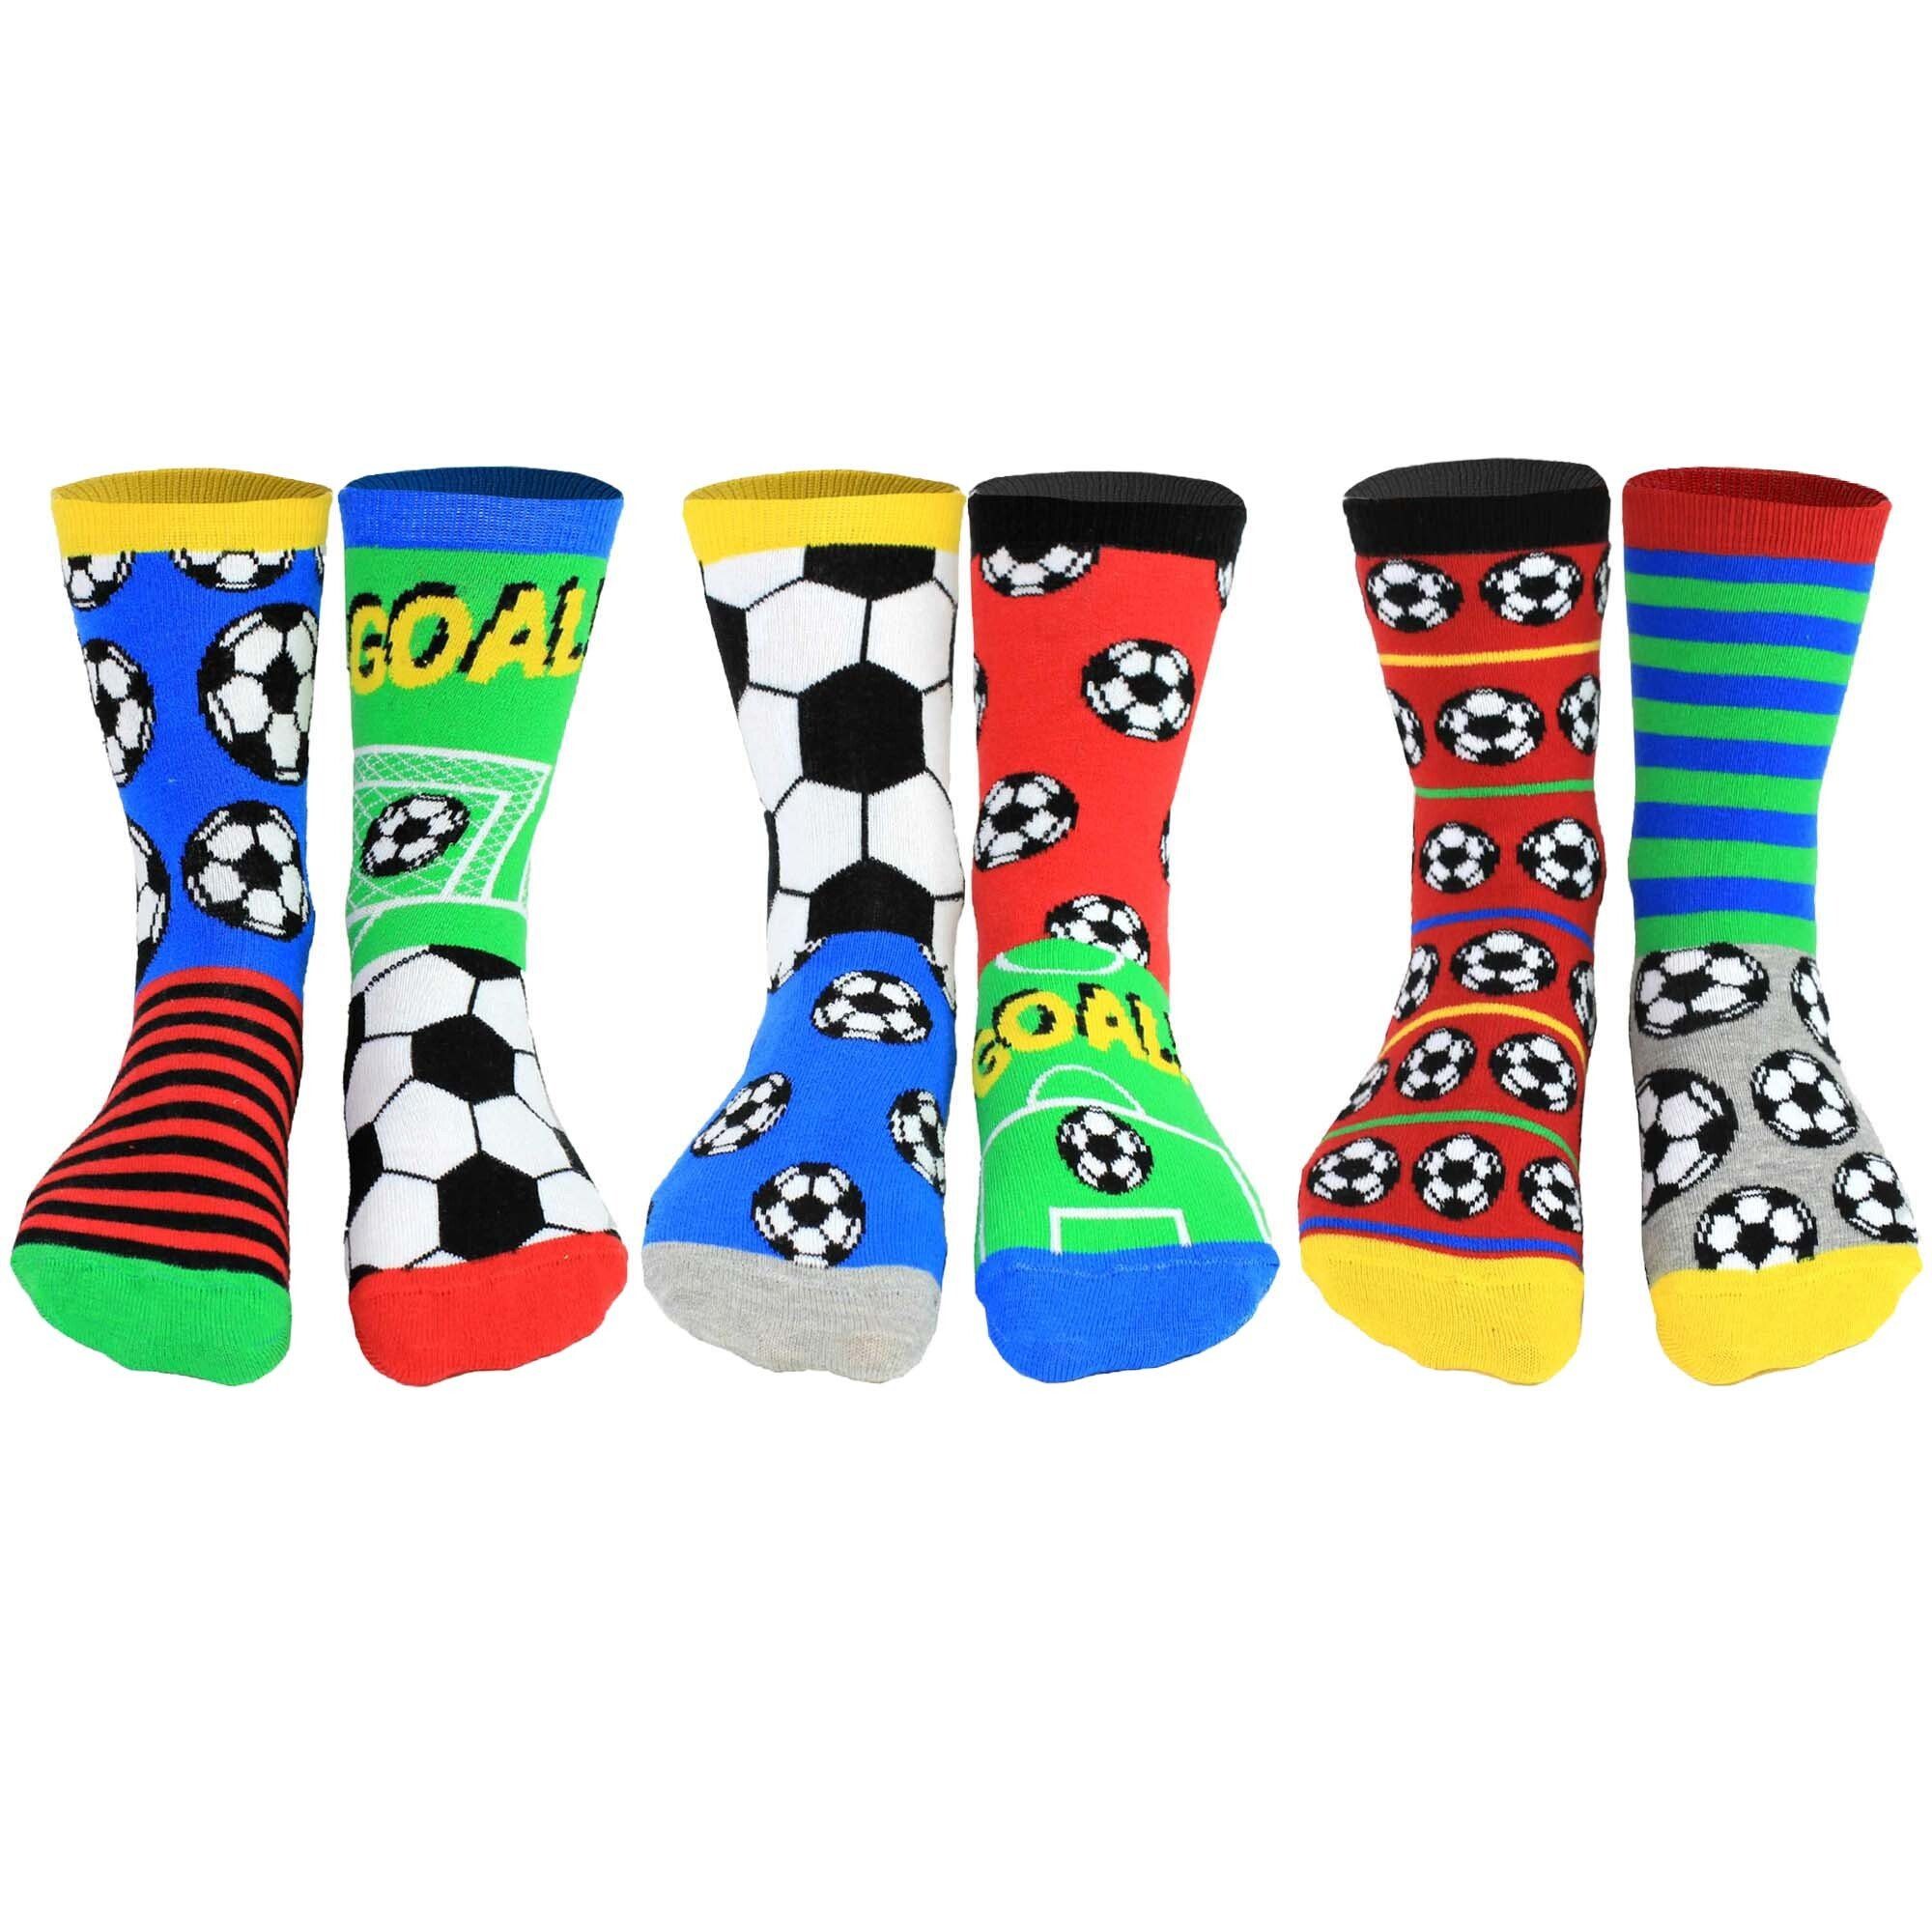 United Oddsocks Freizeitsocken Kinder Socken, 6 individuelle Socken - Kick It!